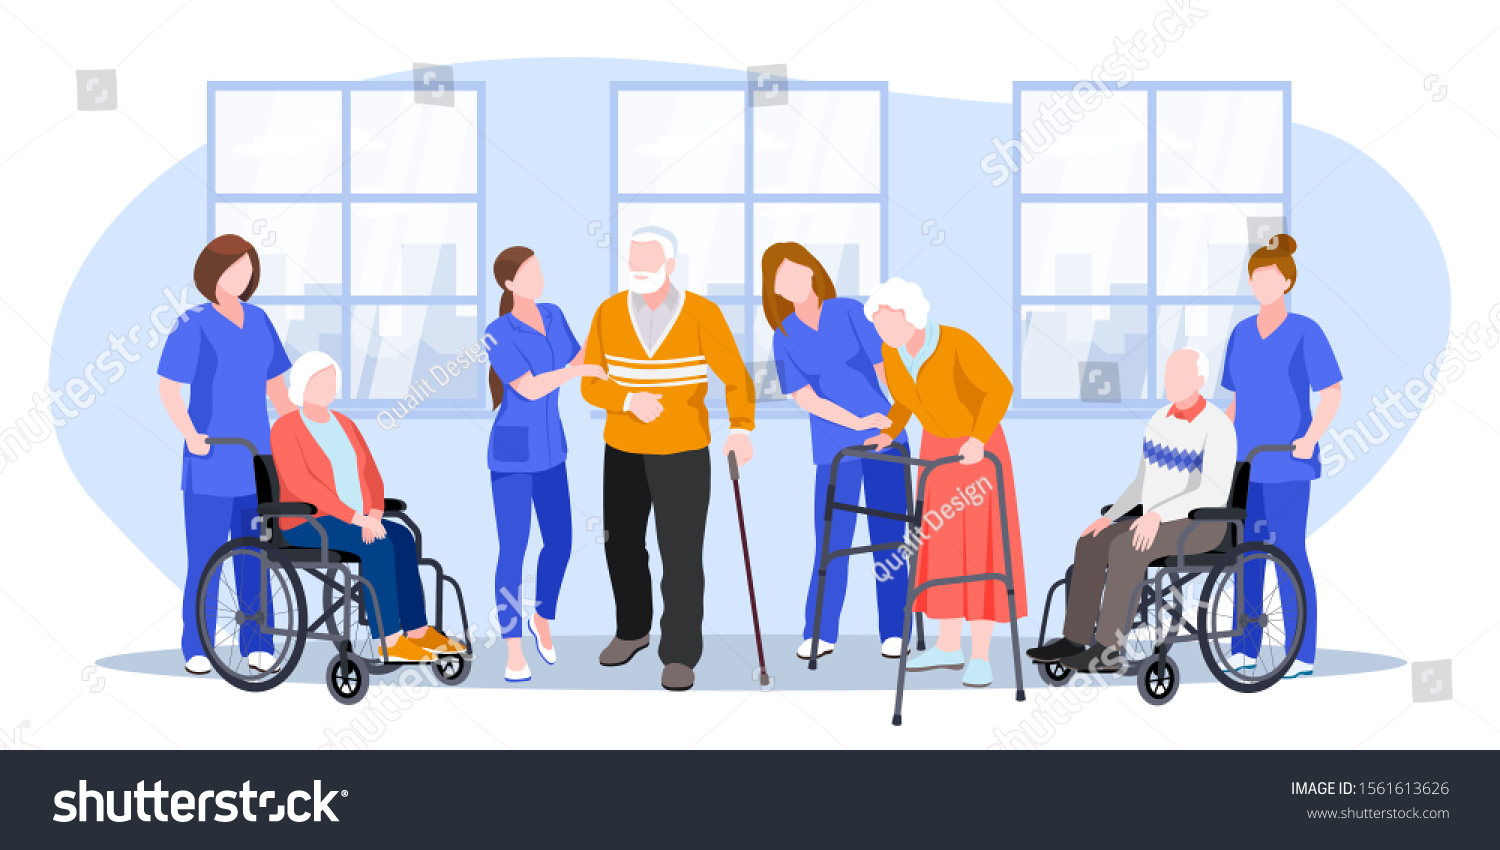 Nurse taking care about seniors people in hospital. Vector flat cartoon illustration. Doctors help elderly people walk and ride wheelchair. #1561613626